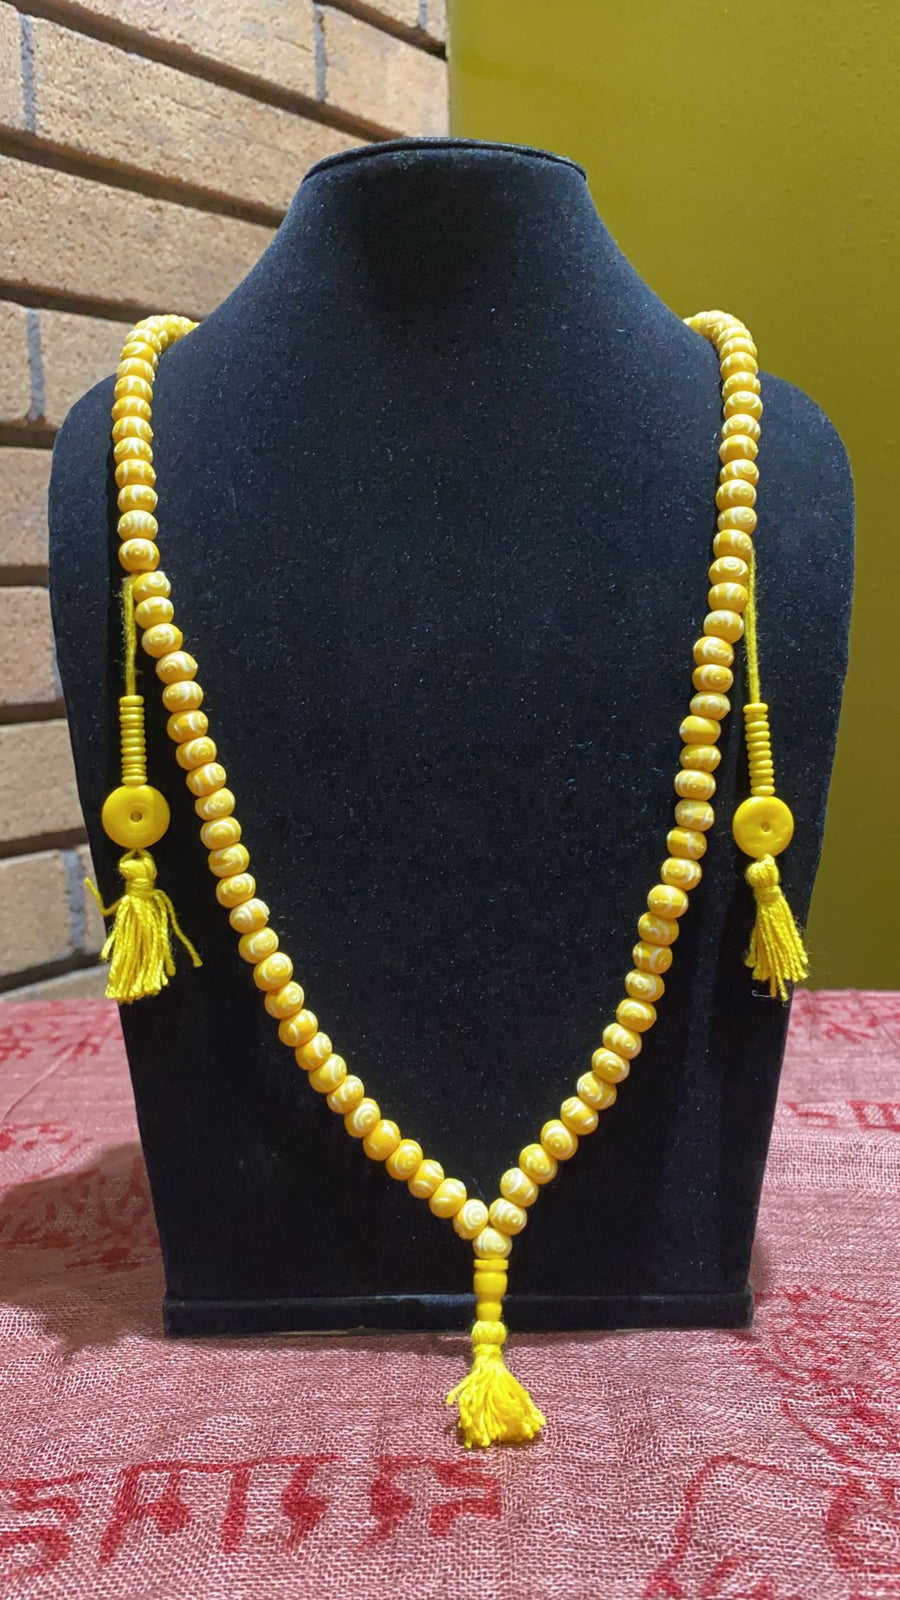 Handmade mala necklaces